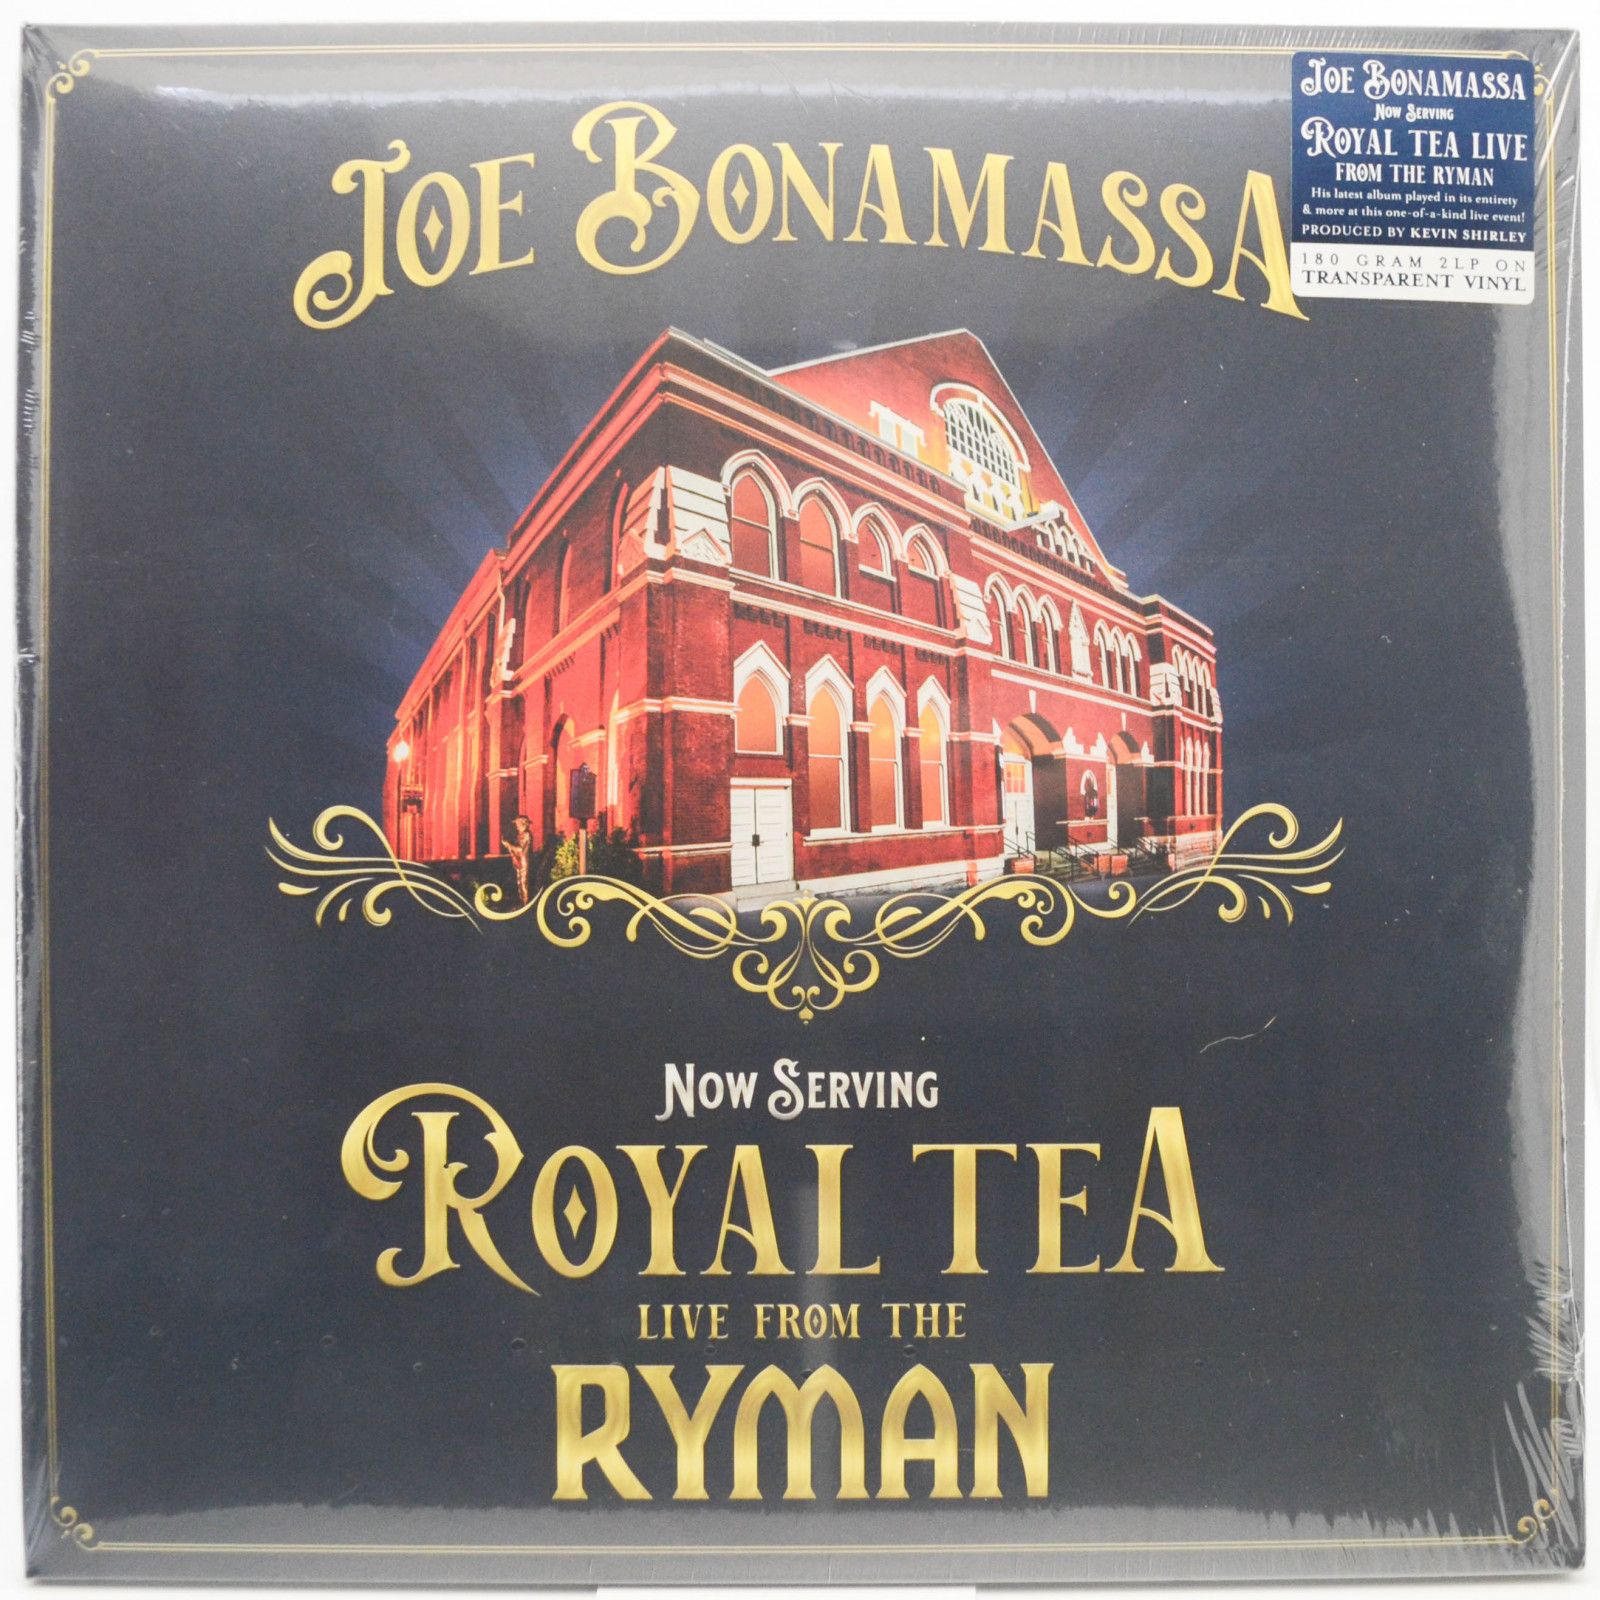 Joe Bonamassa — Now Serving: Royal Tea Live From The Ryman (2LP), 2021